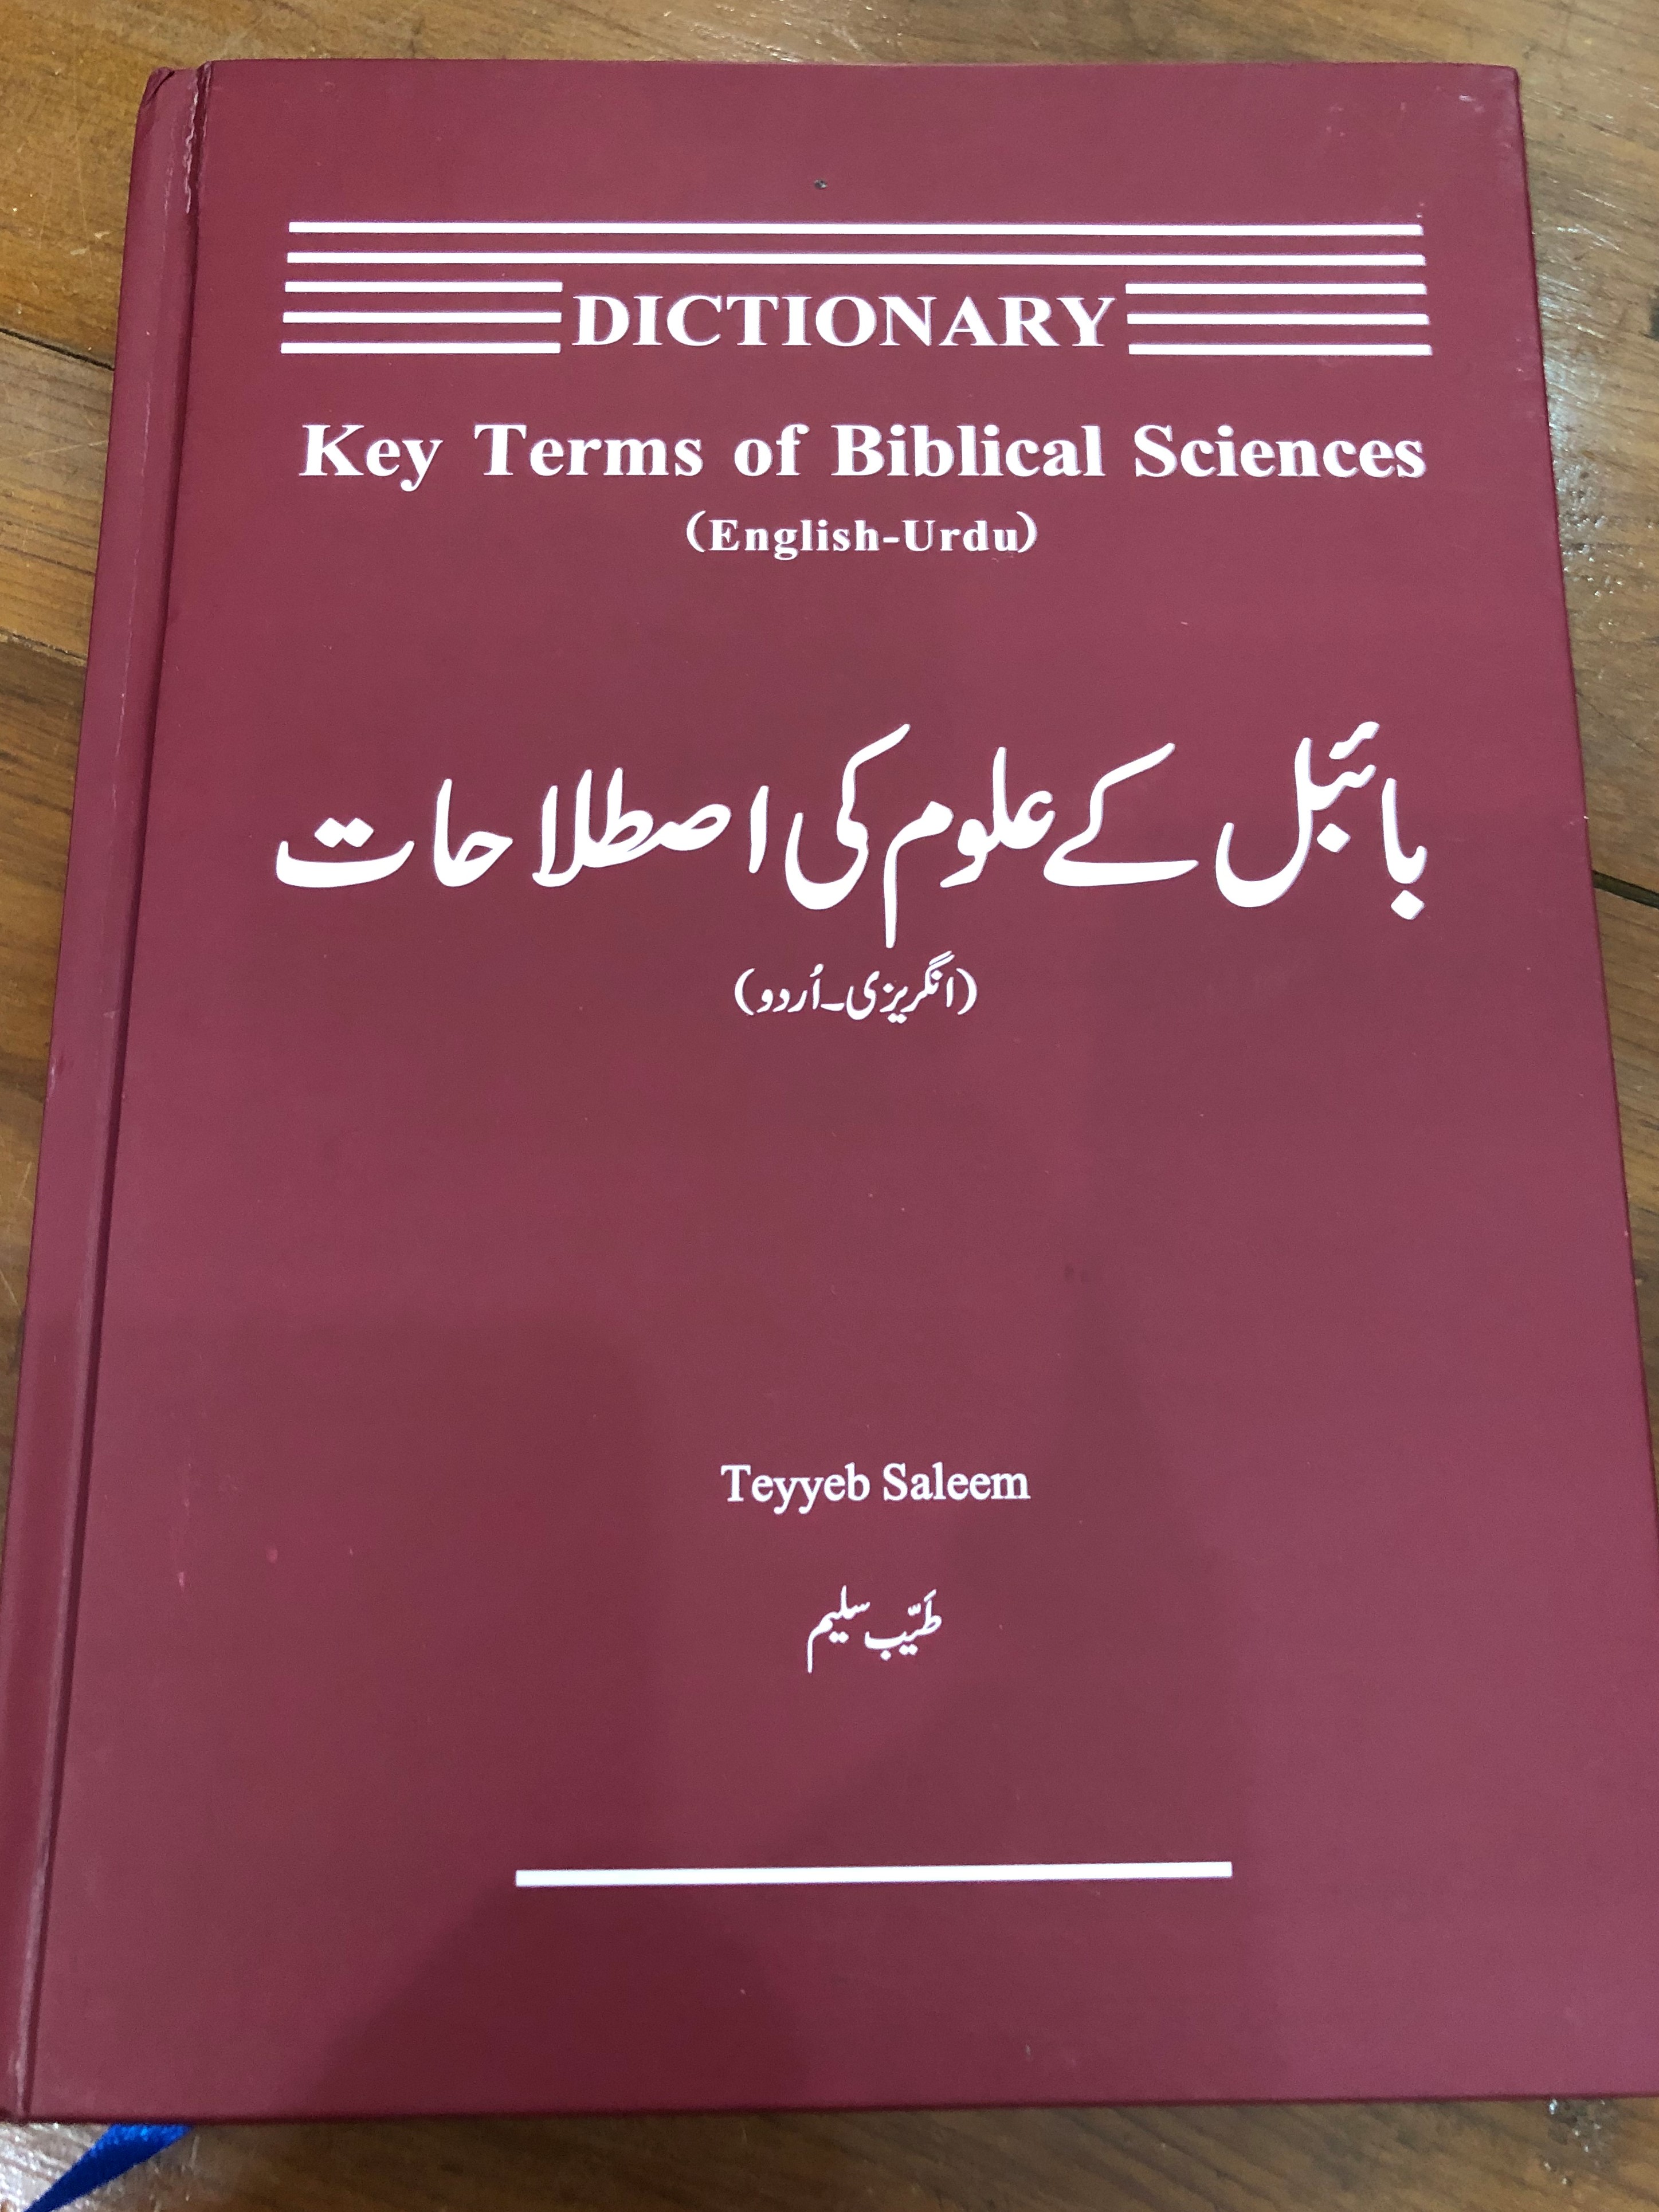 english-urdu-key-terms-of-biblical-sciences-dictionary-teyyeb-saleem-catholic-bible-commission-pakistan-cbcp-1-.jpg